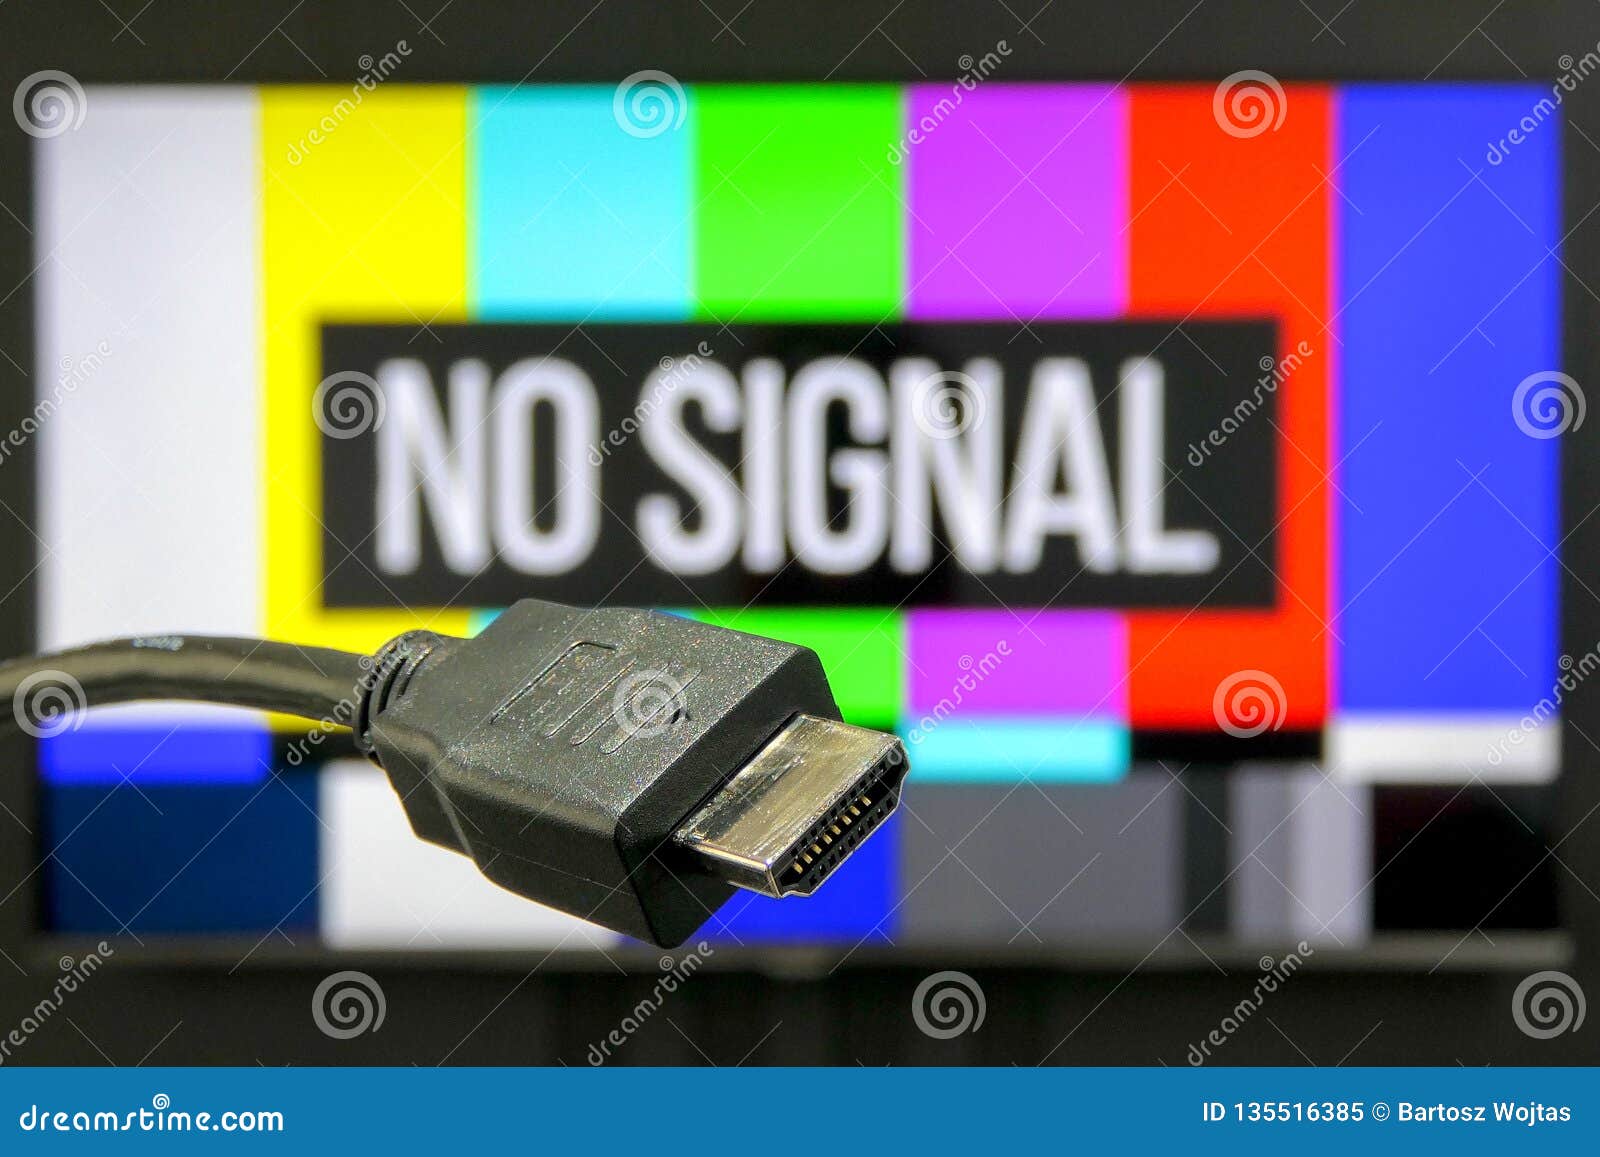 no signal on tv hdmi